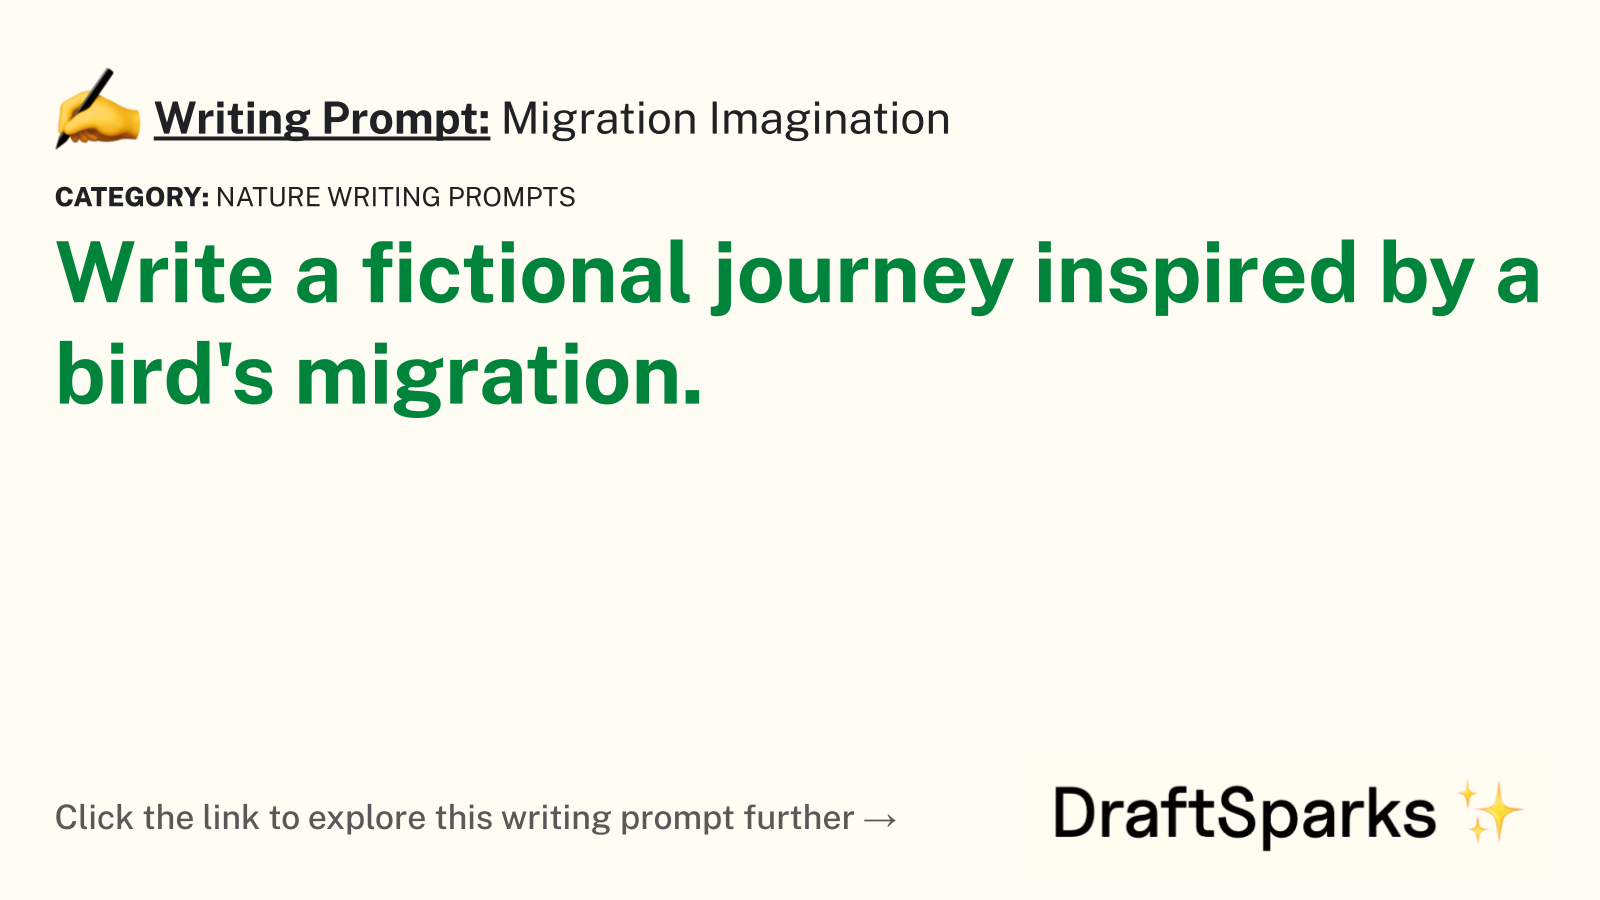 Migration Imagination